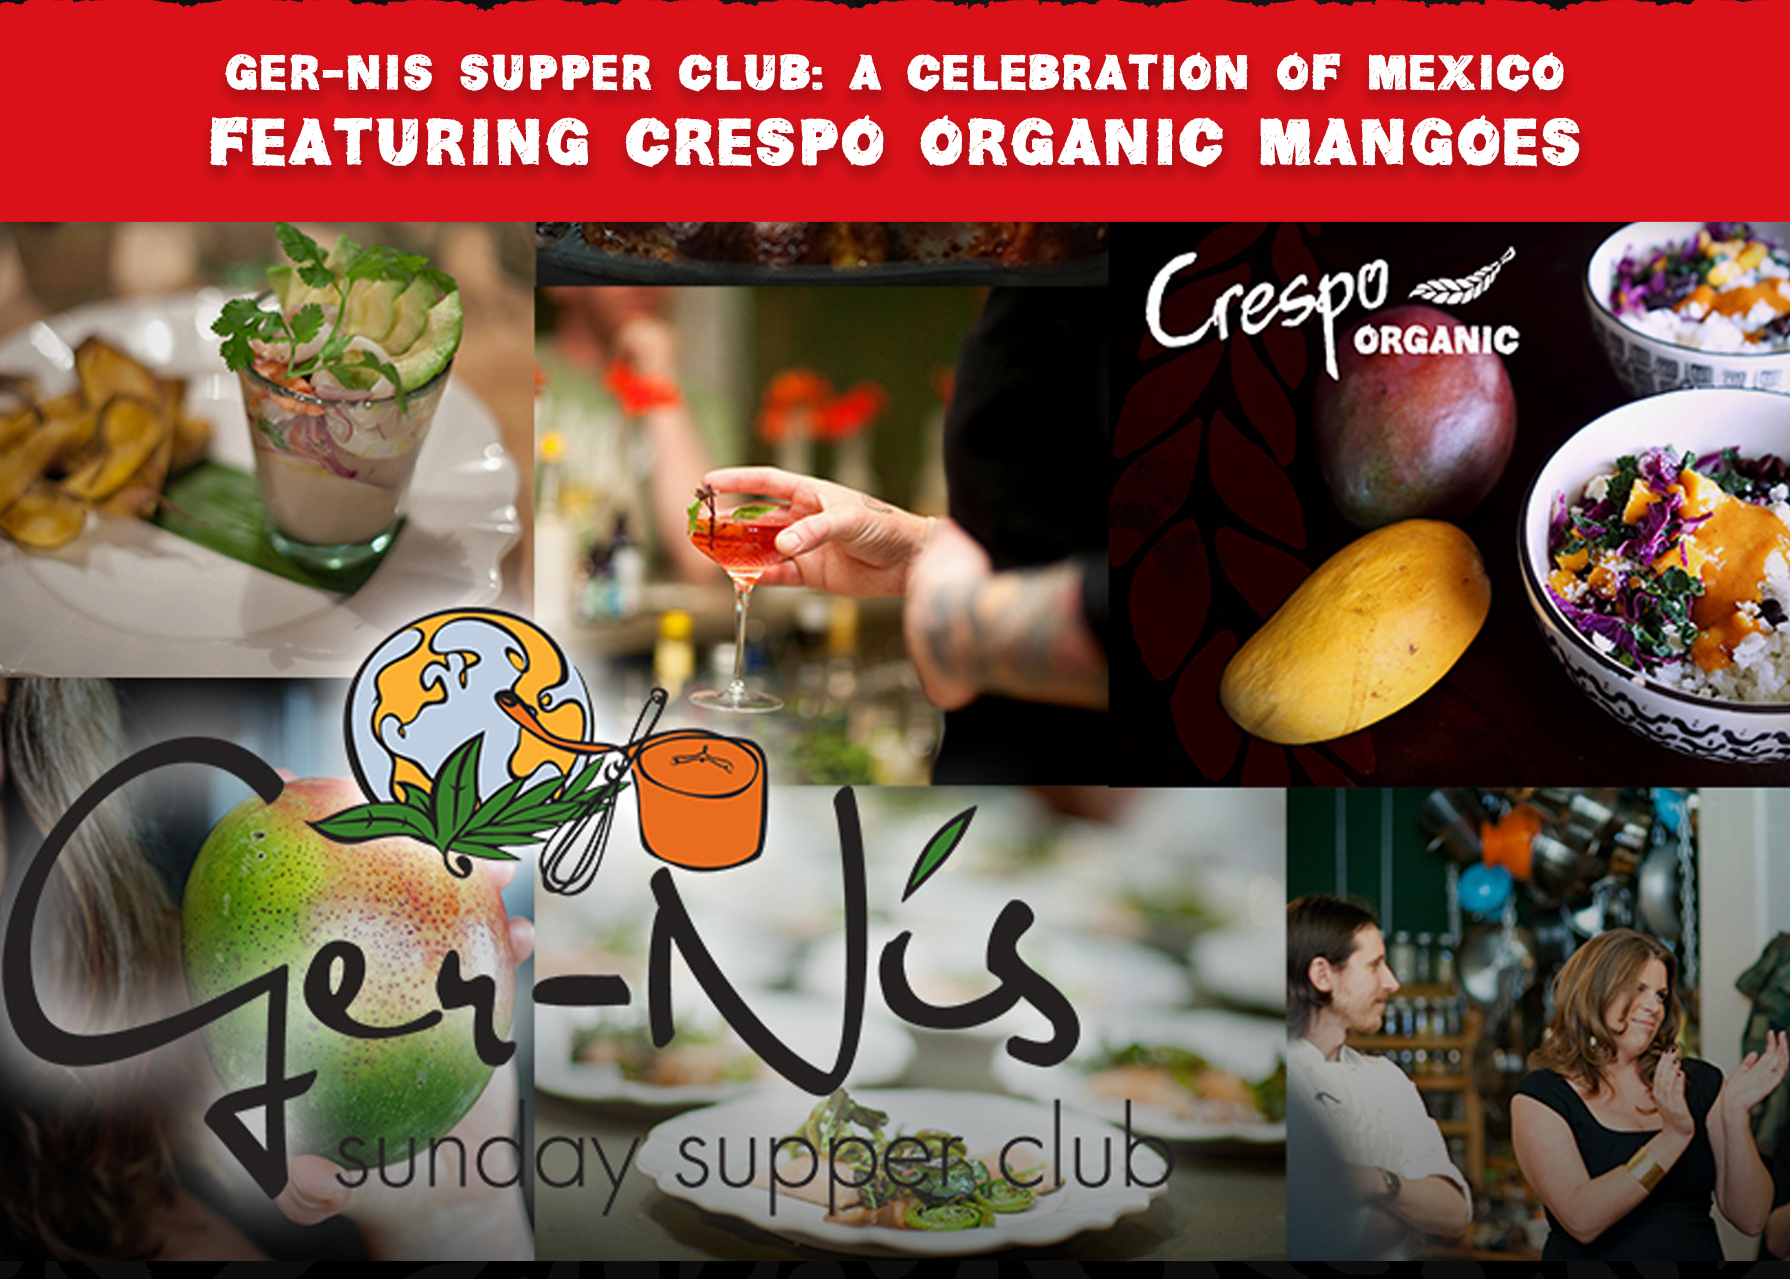 <a class="wonderplugin-gridgallery-posttitle-link" href="https://www.underthemangotree.crespoorganic.com/2021/06/26/celebrating-mexico-mangoes-with-ger-nis/" target="_blank">Celebrating Mexico & Mangoes with Ger-Nis</a>